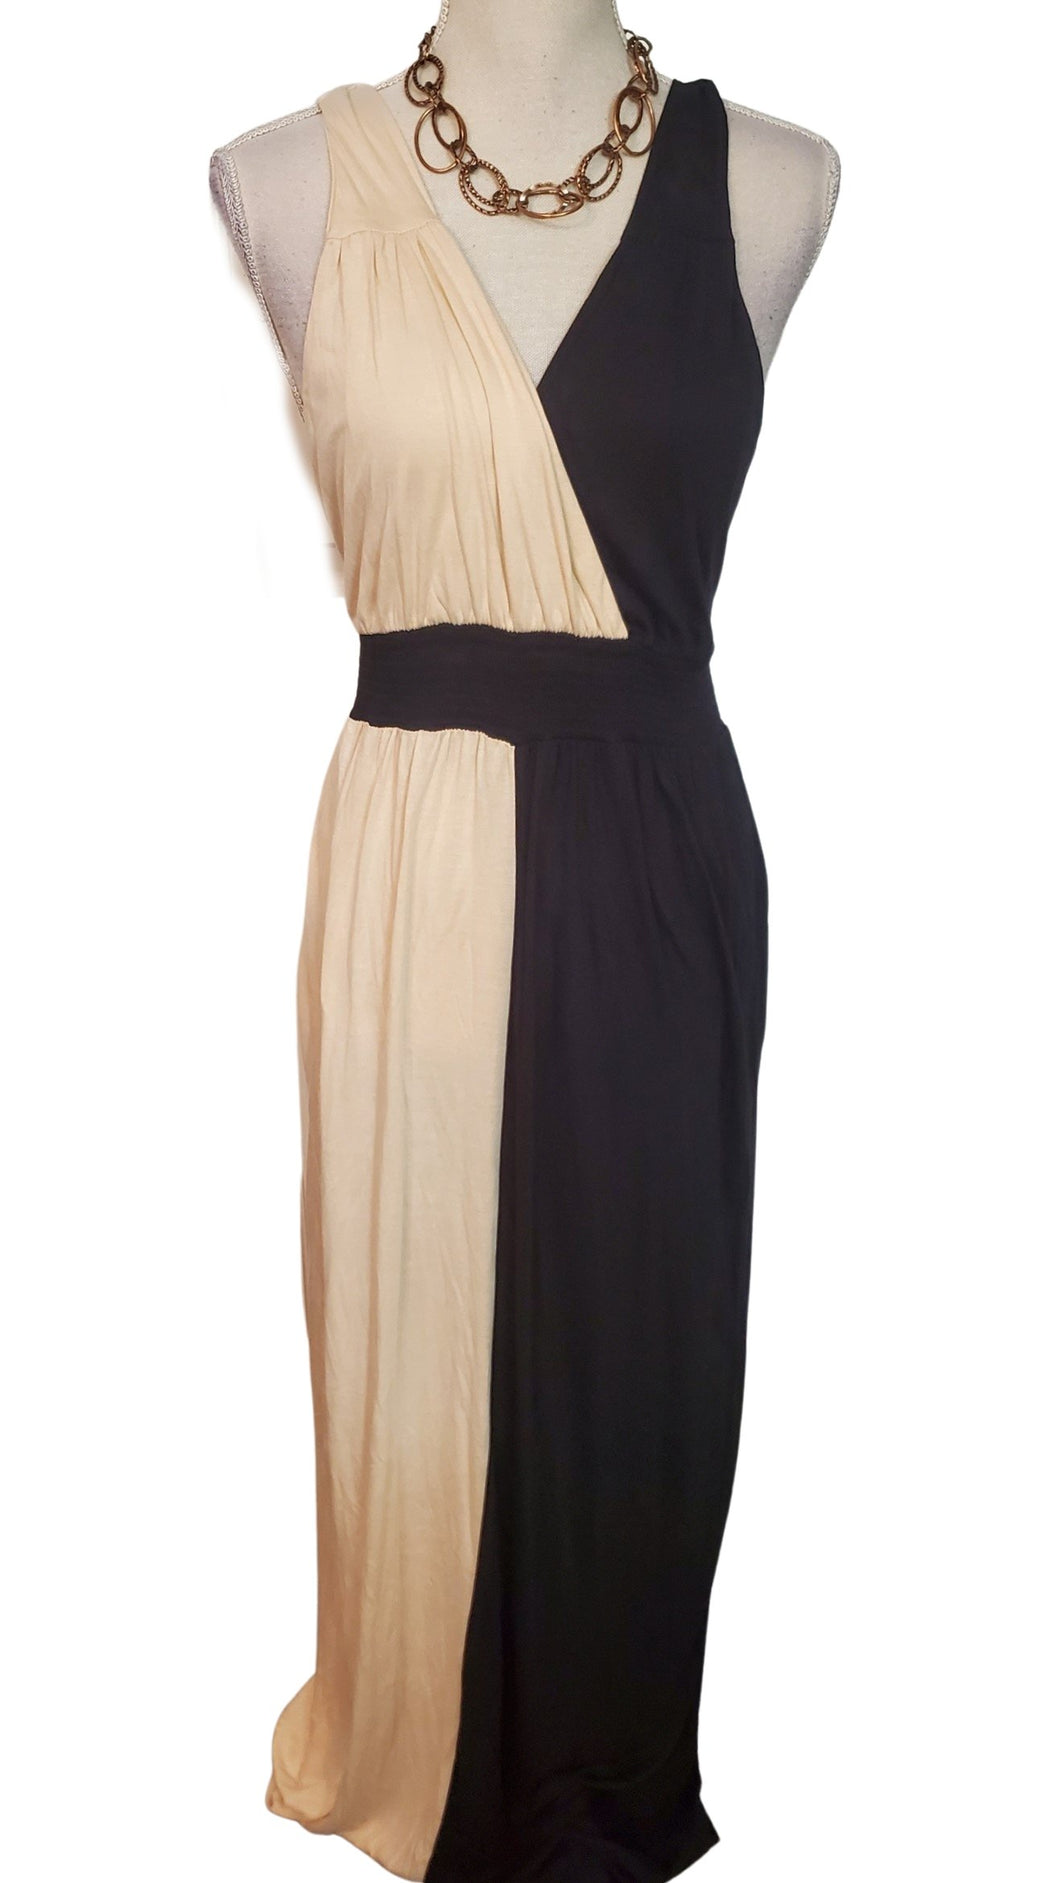 Long Color Blocked Peach and Black, Sleeveless Dress, Size Medium